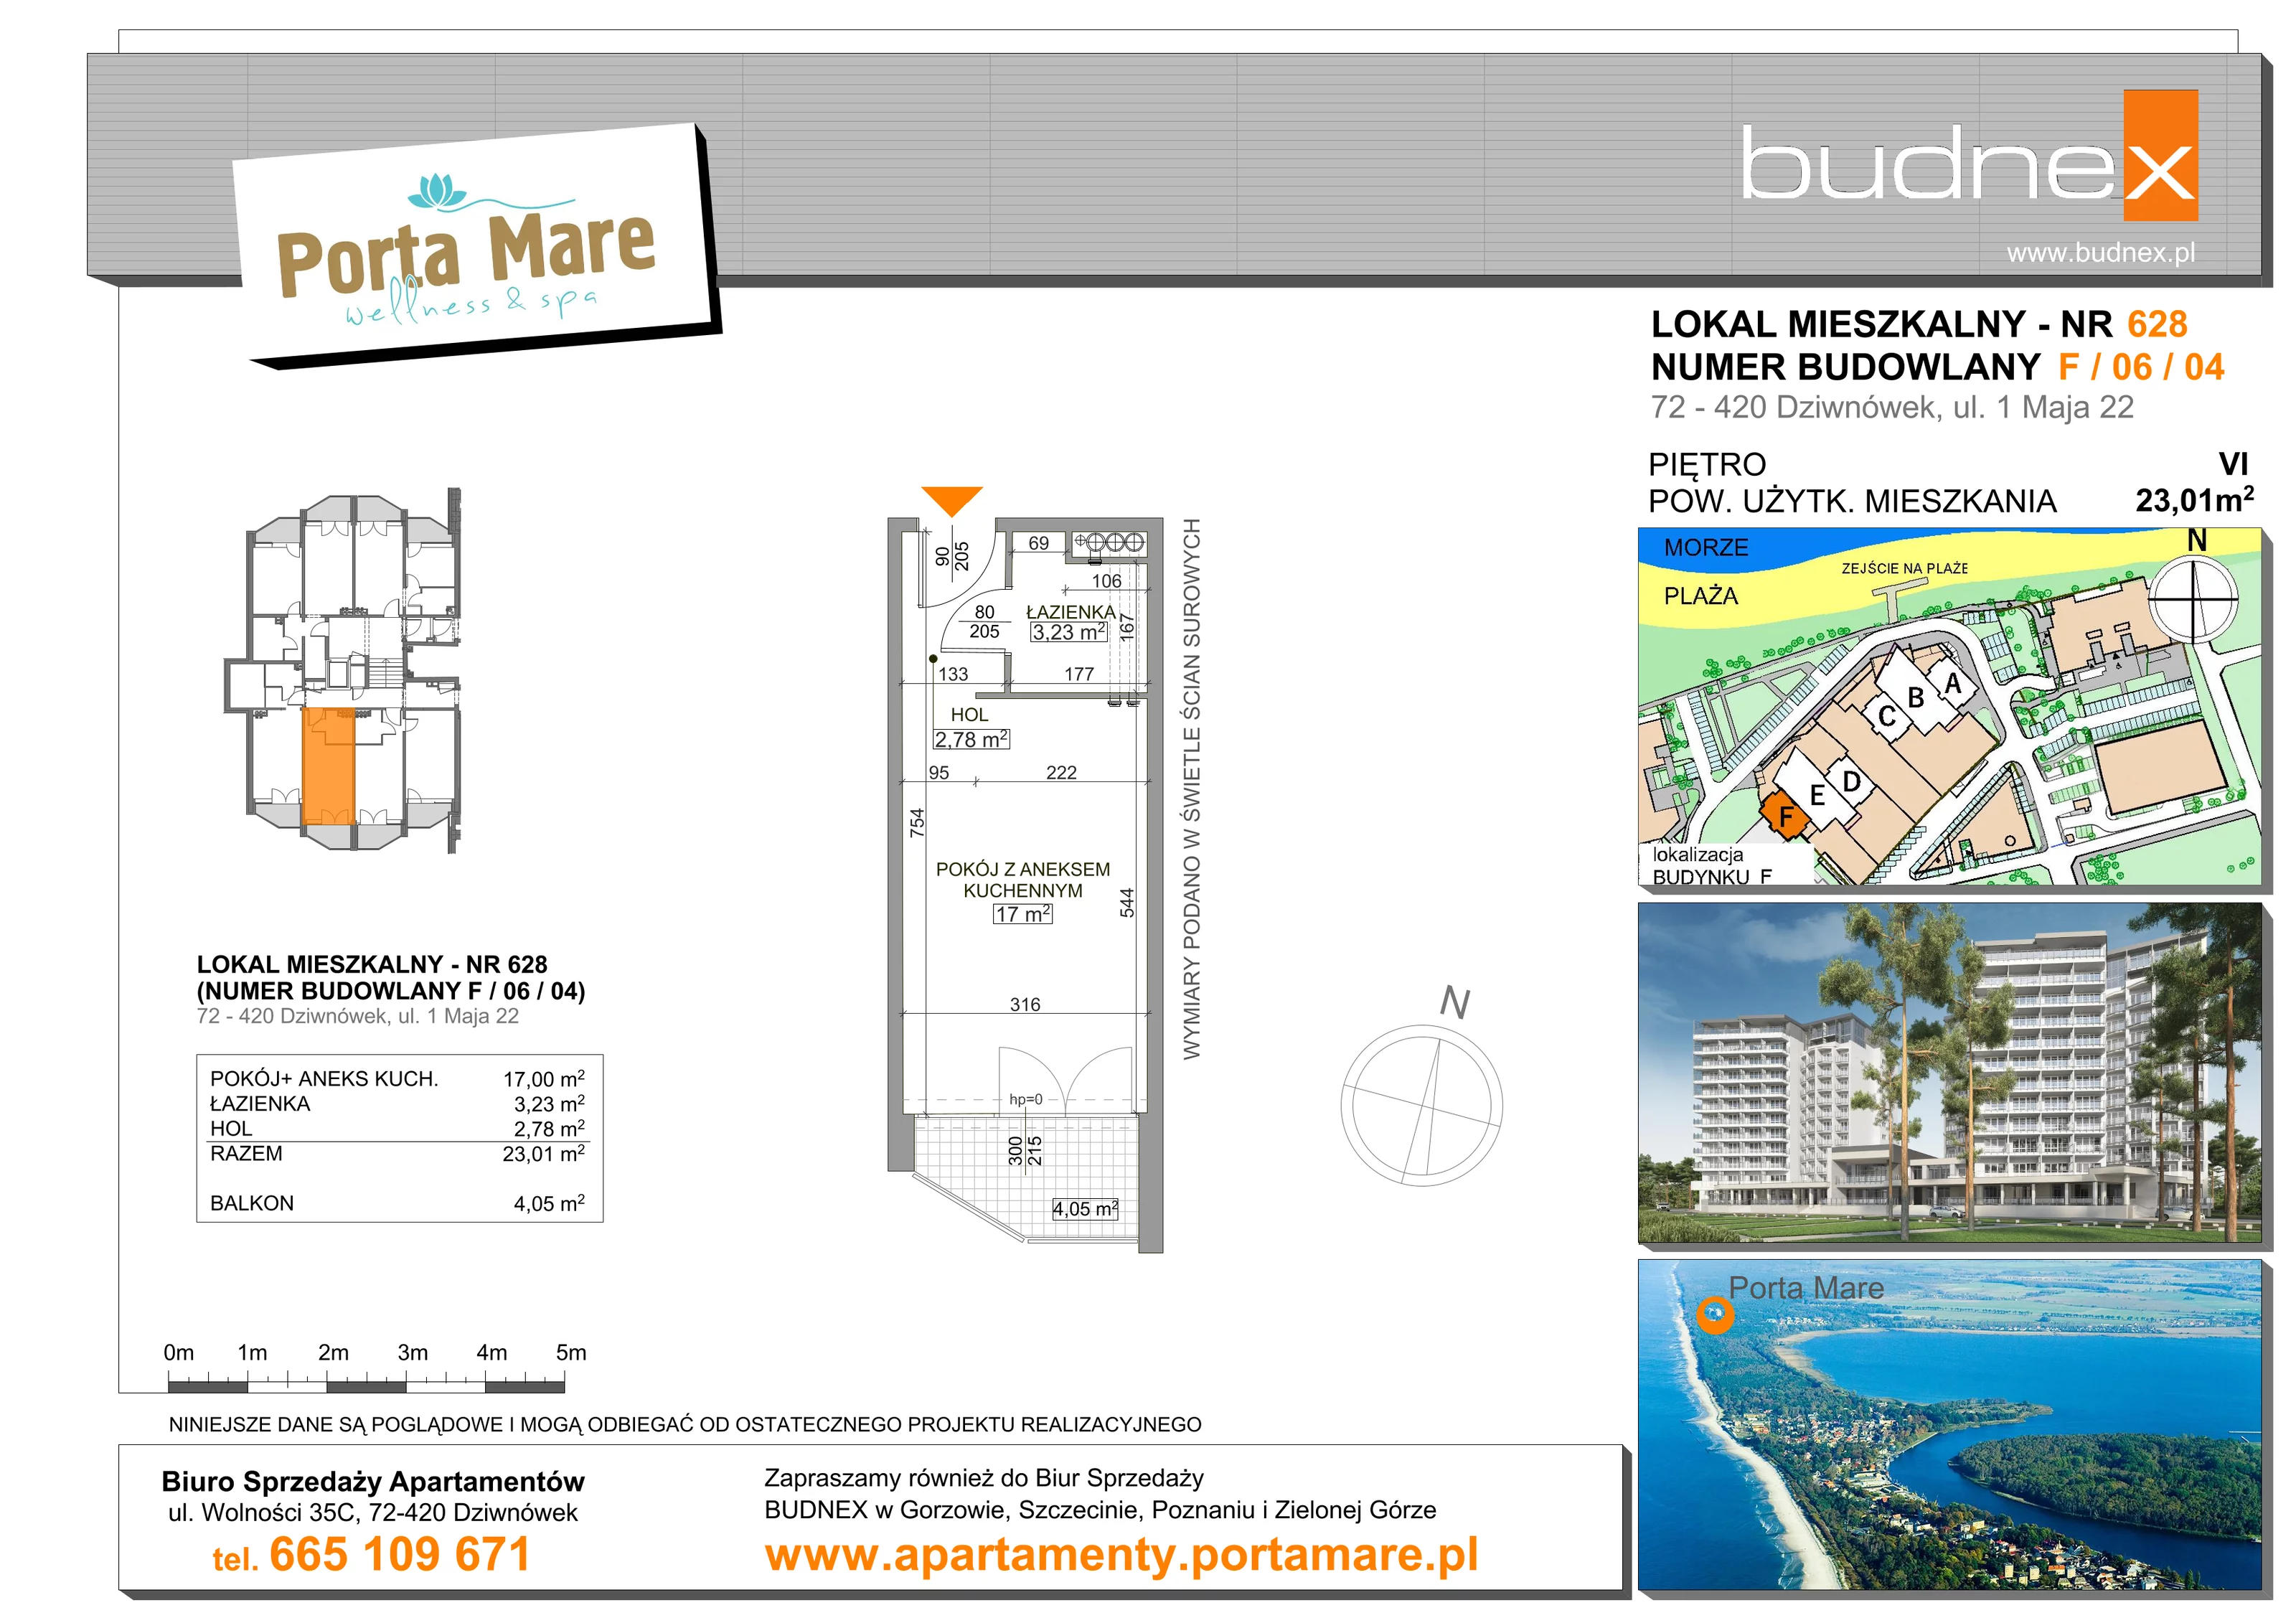 Apartament 23,01 m², piętro 6, oferta nr 628, Porta Mare Wellness & Spa, Dziwnówek, ul. Wolności